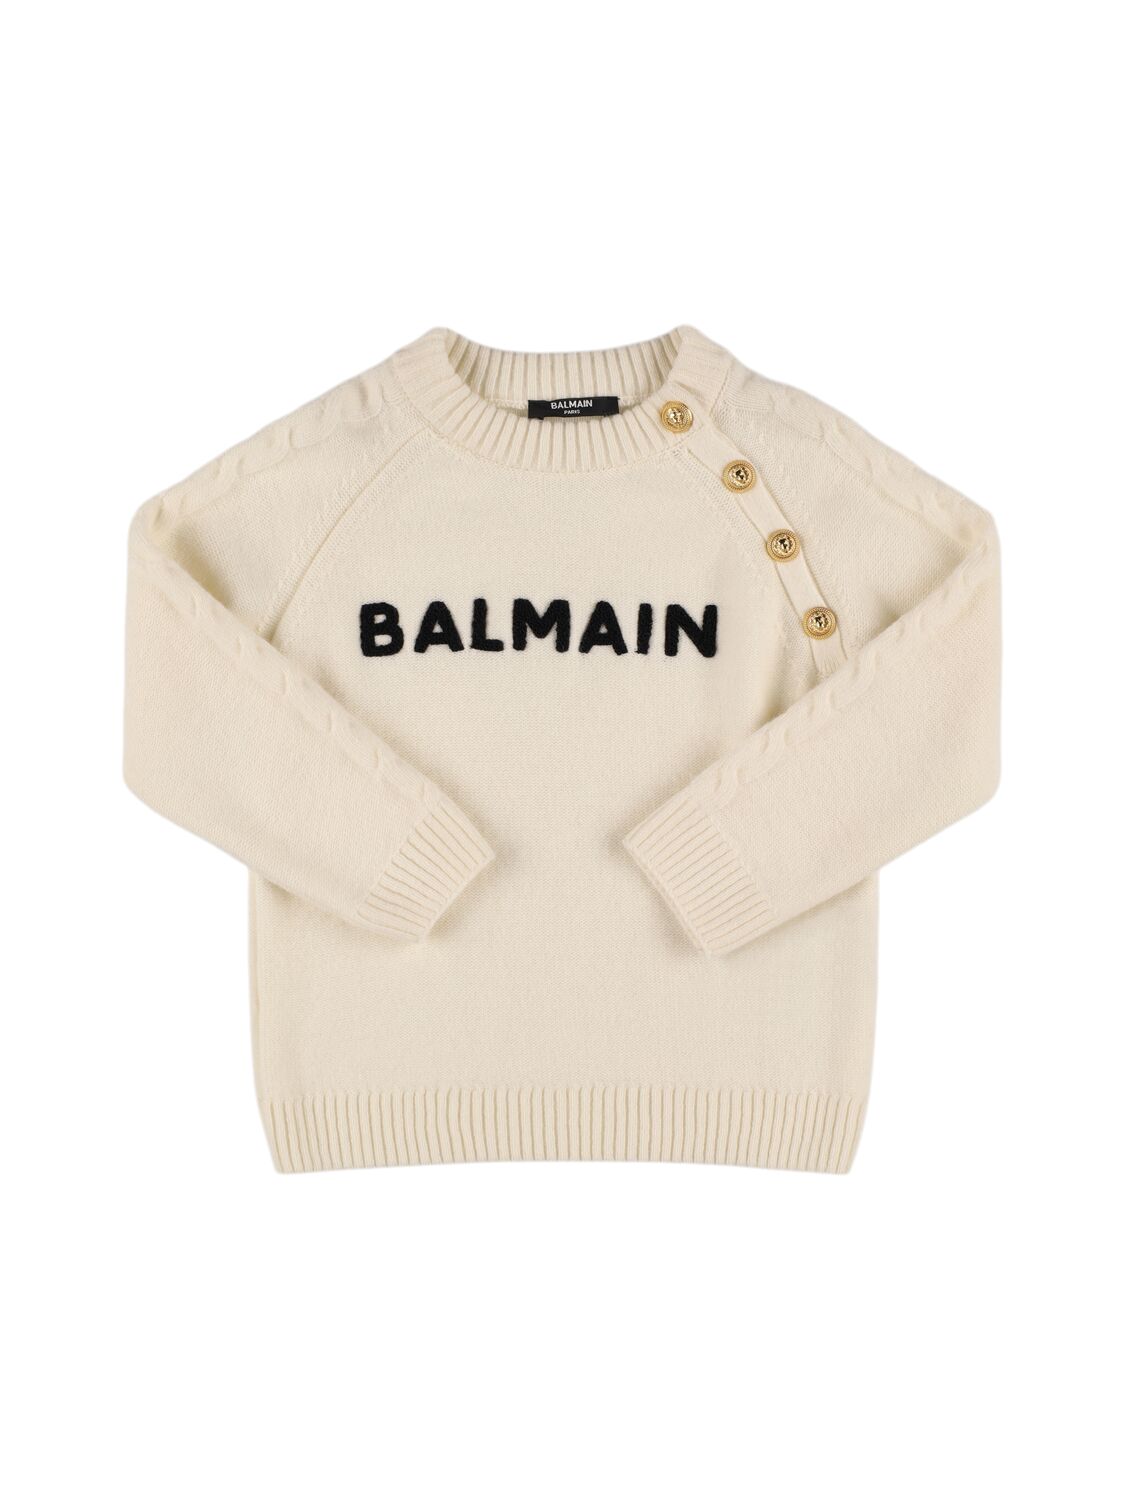 Balmain Wool Blend Knit Sweater W/ Buttons In Neutral